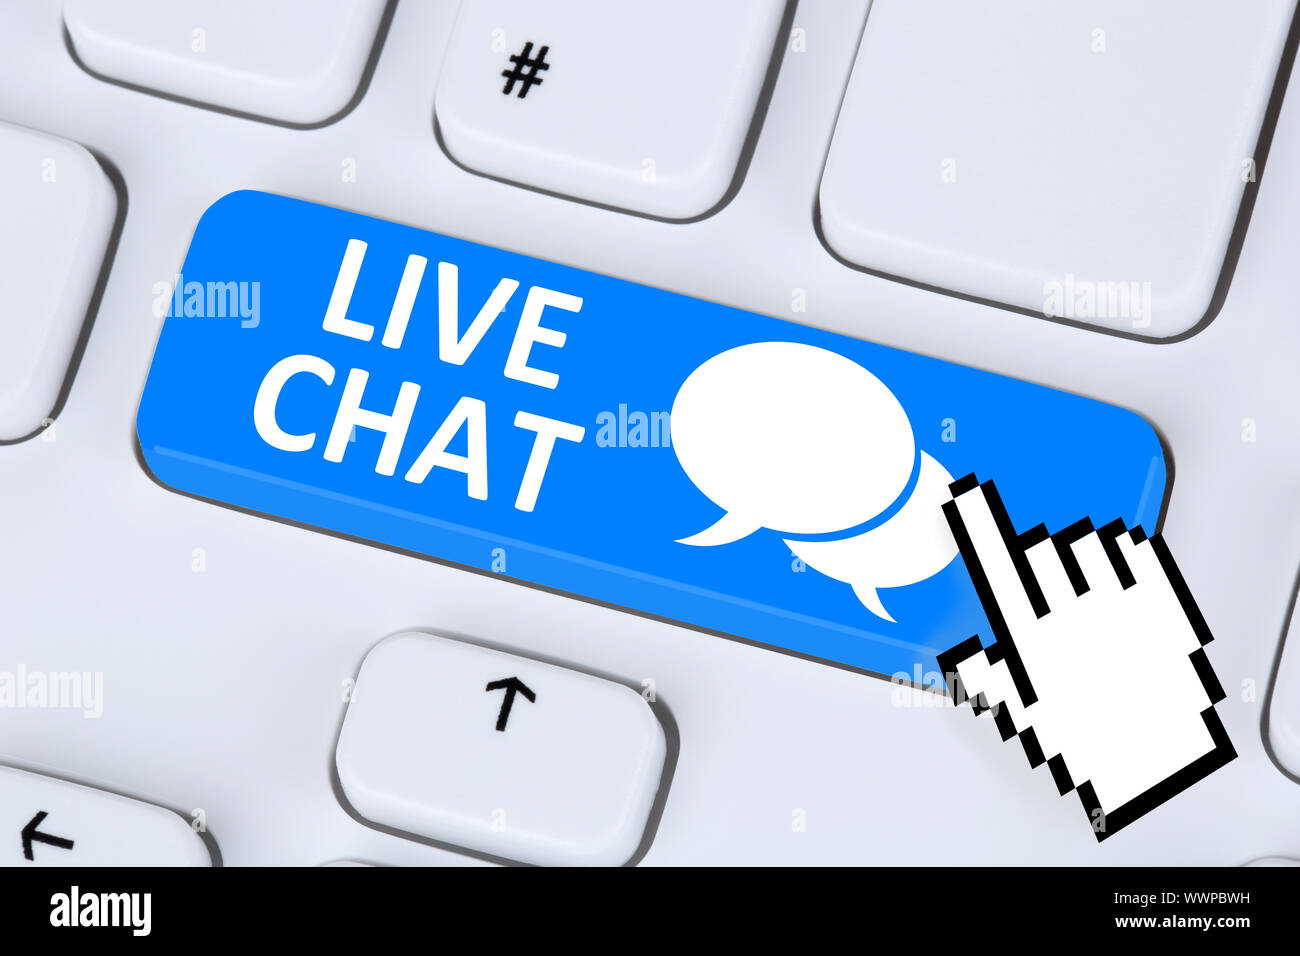 Live chat communication